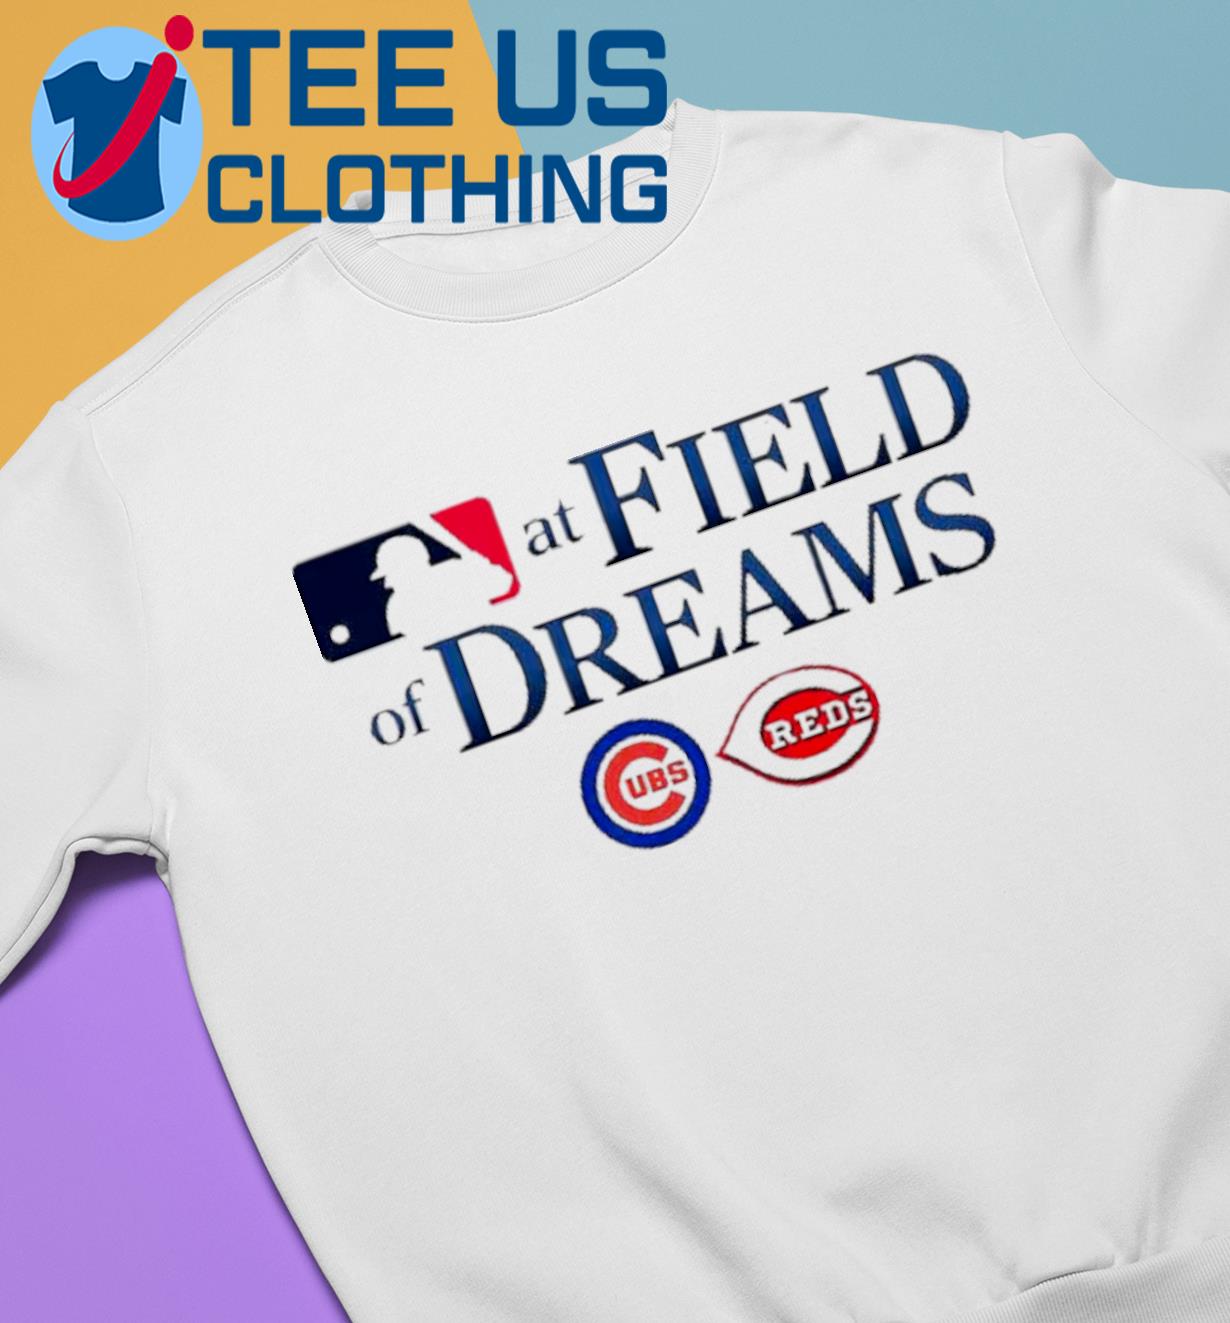 Chicago Cubs vs Cincinnati Reds field of dreams 2022 shirt